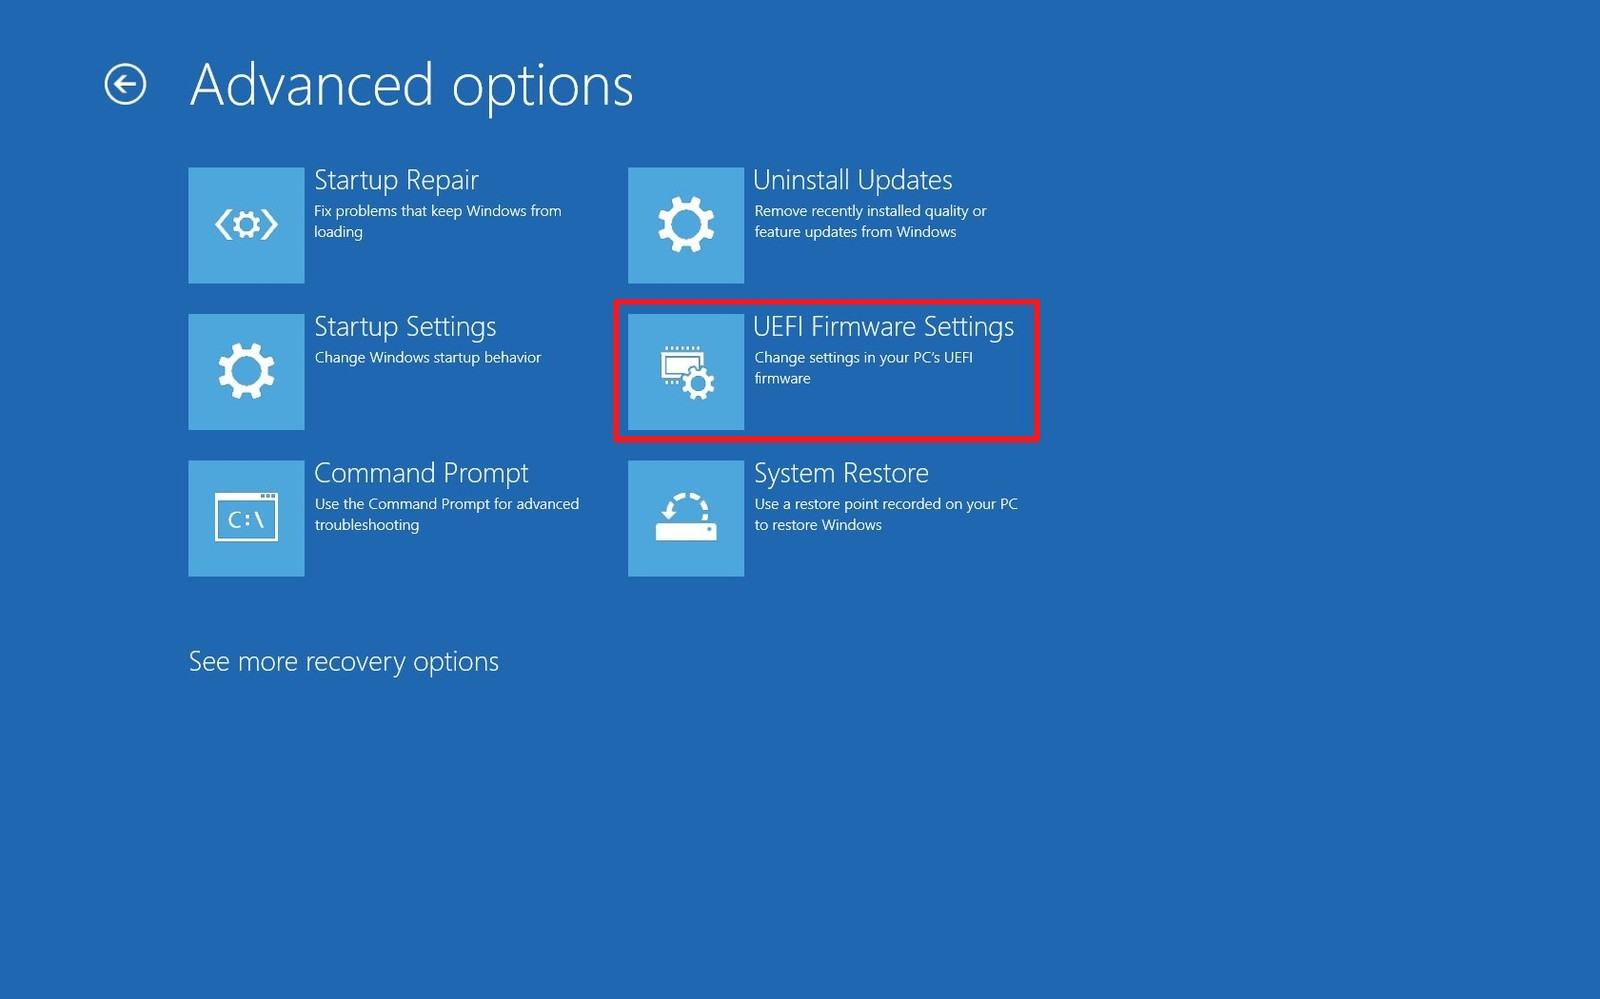 Select UEFI Firmware Settings